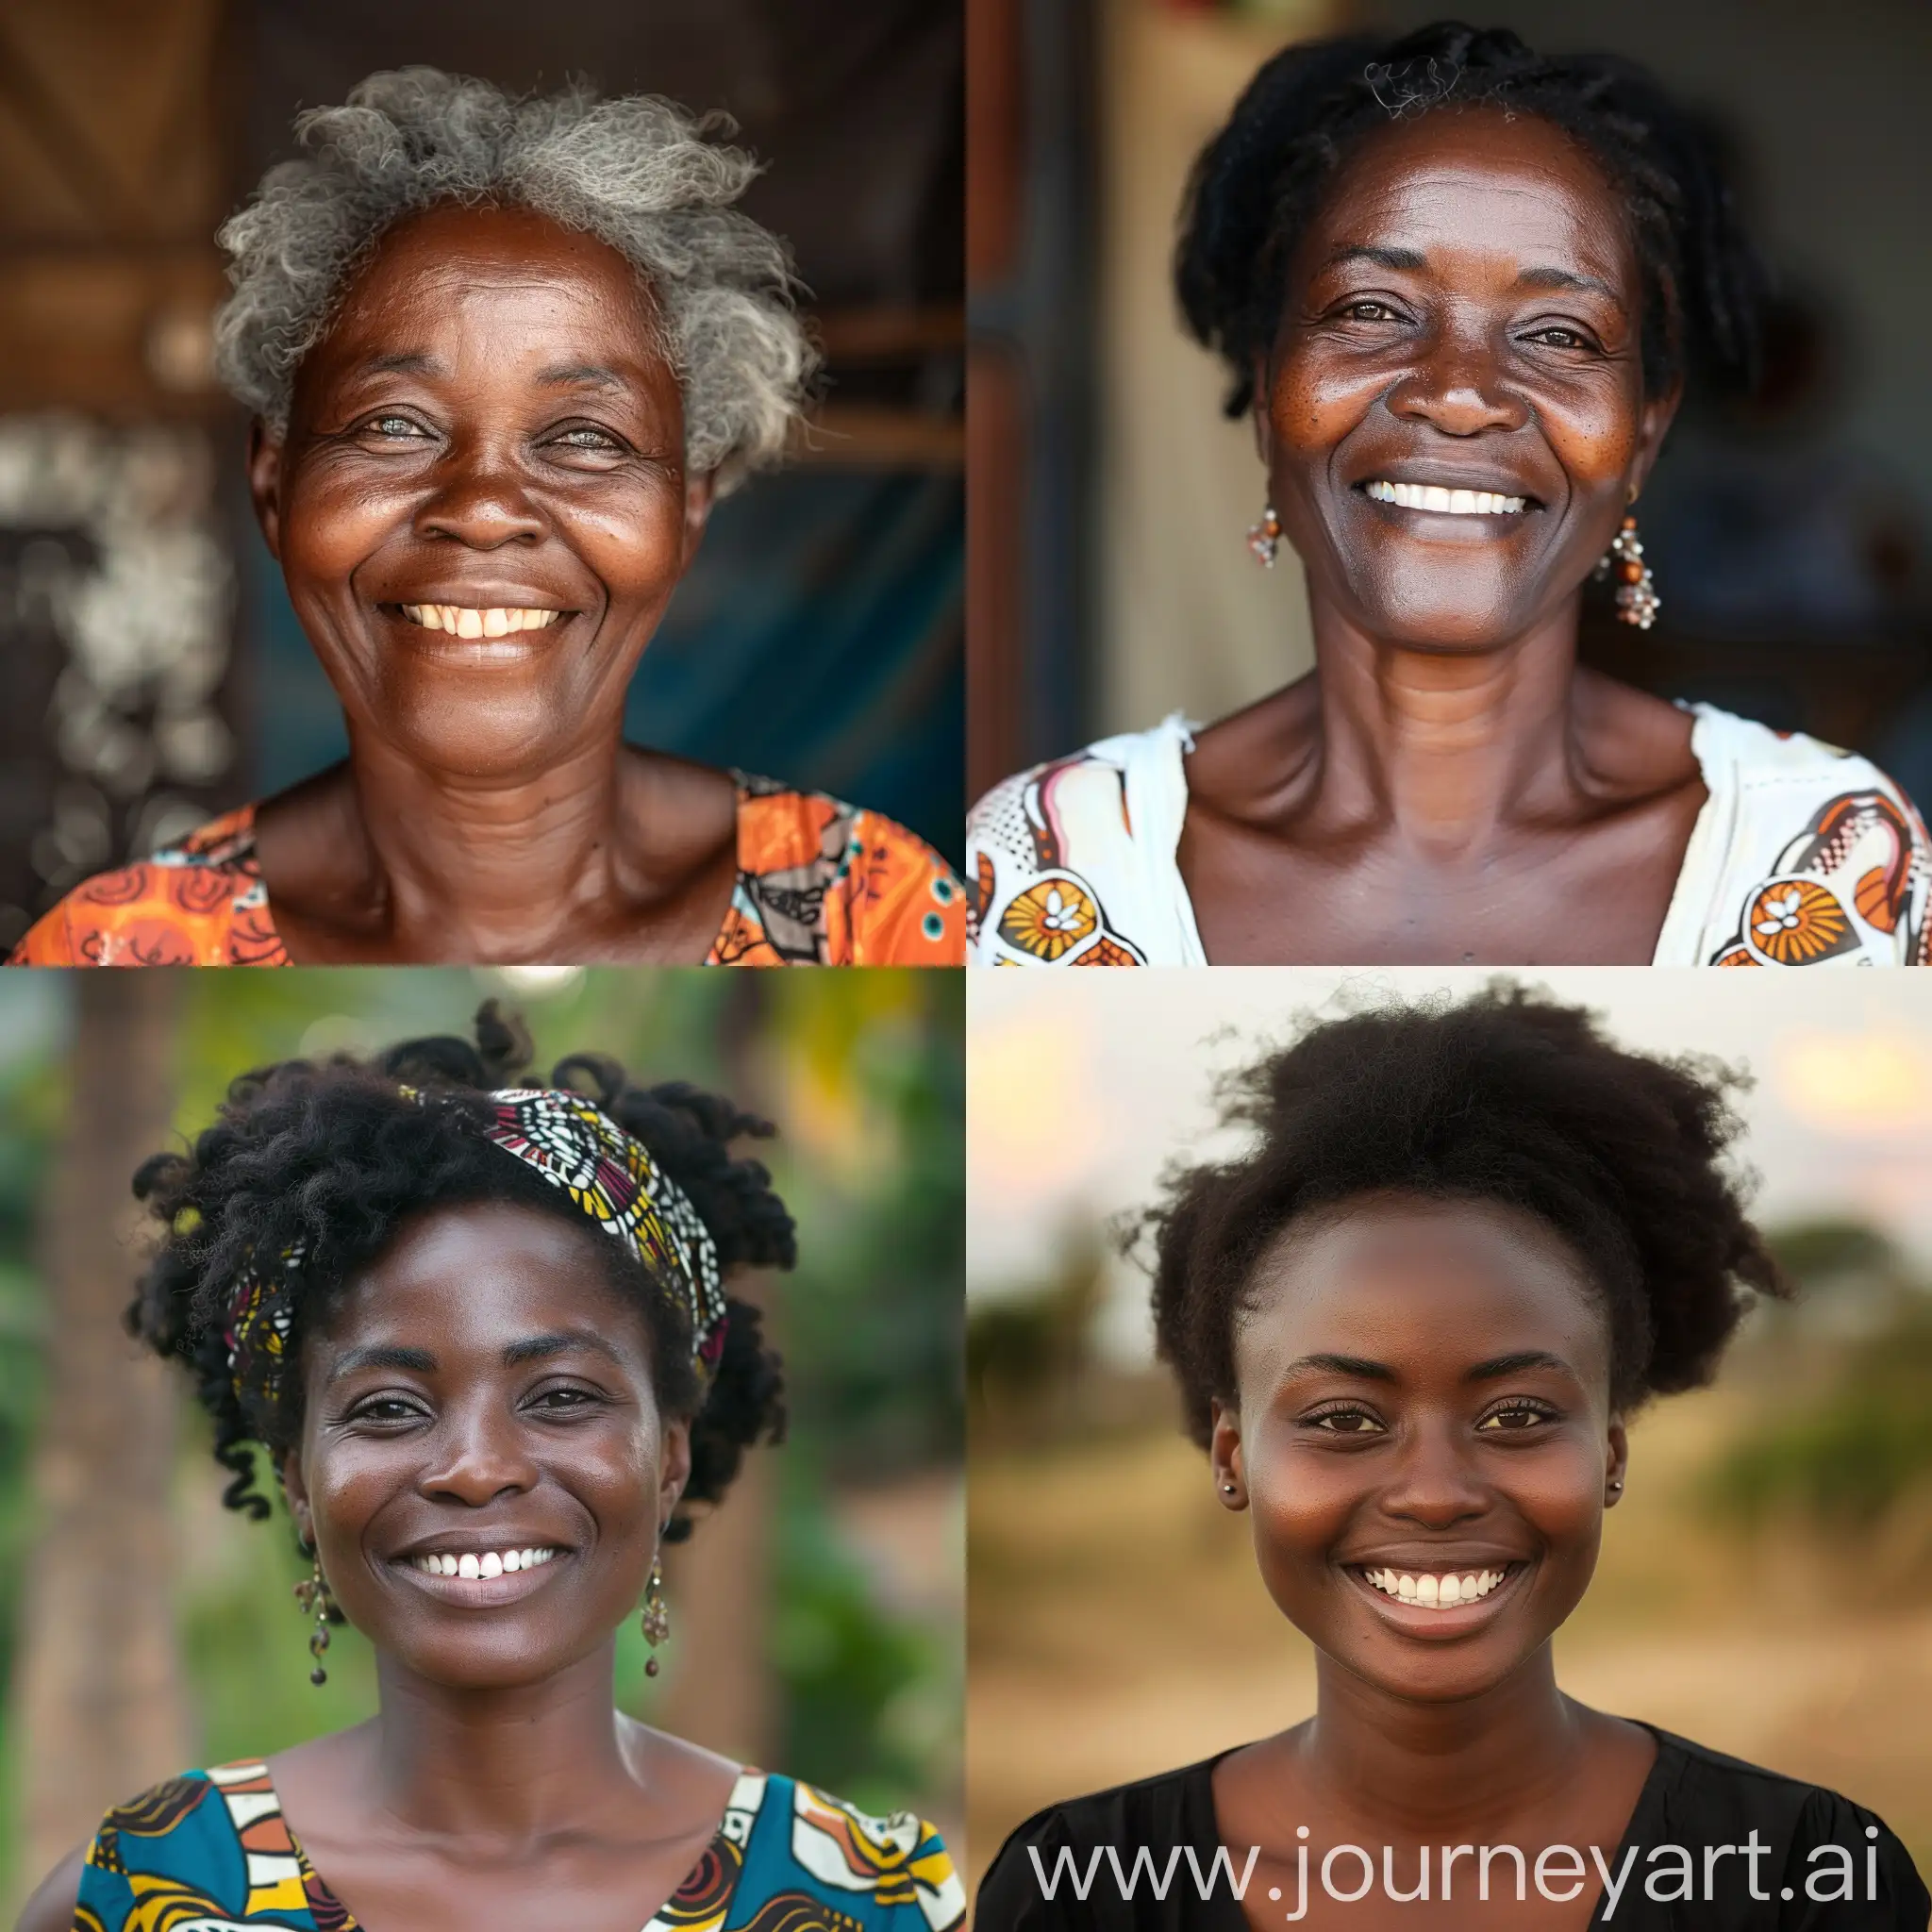 Joyful-African-Woman-Smiling-in-Medium-Shot-Portrait